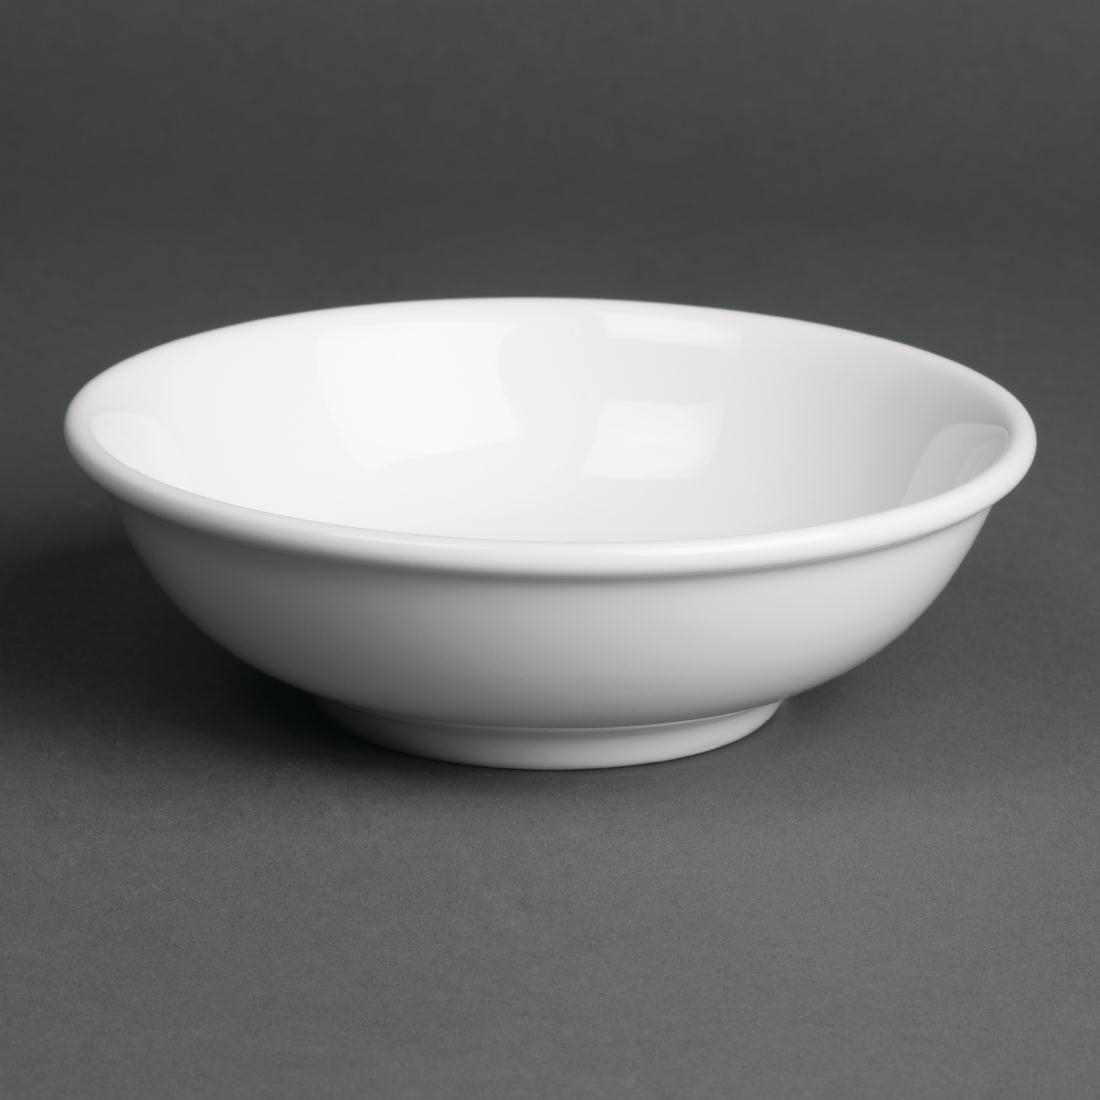 Royal Porcelain Classic White Cereal Bowls 140mm